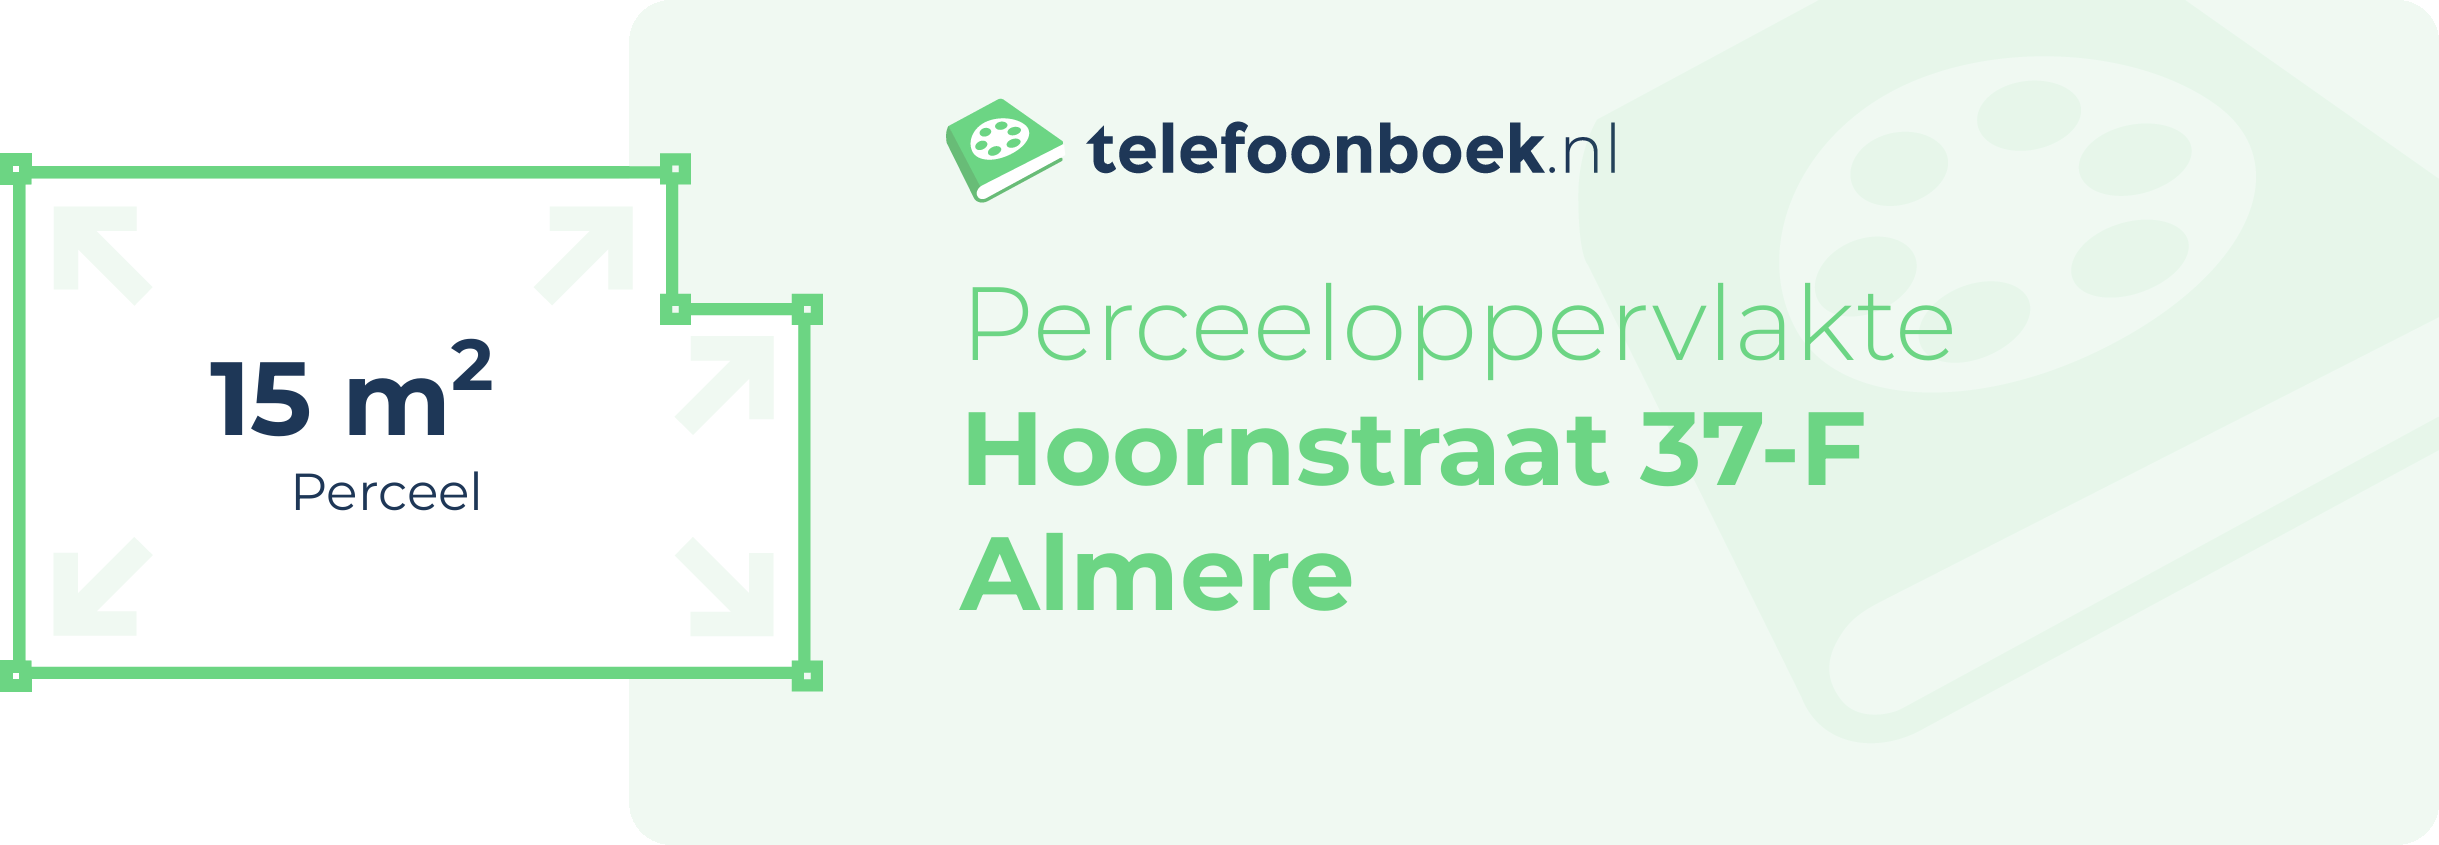 Perceeloppervlakte Hoornstraat 37-F Almere